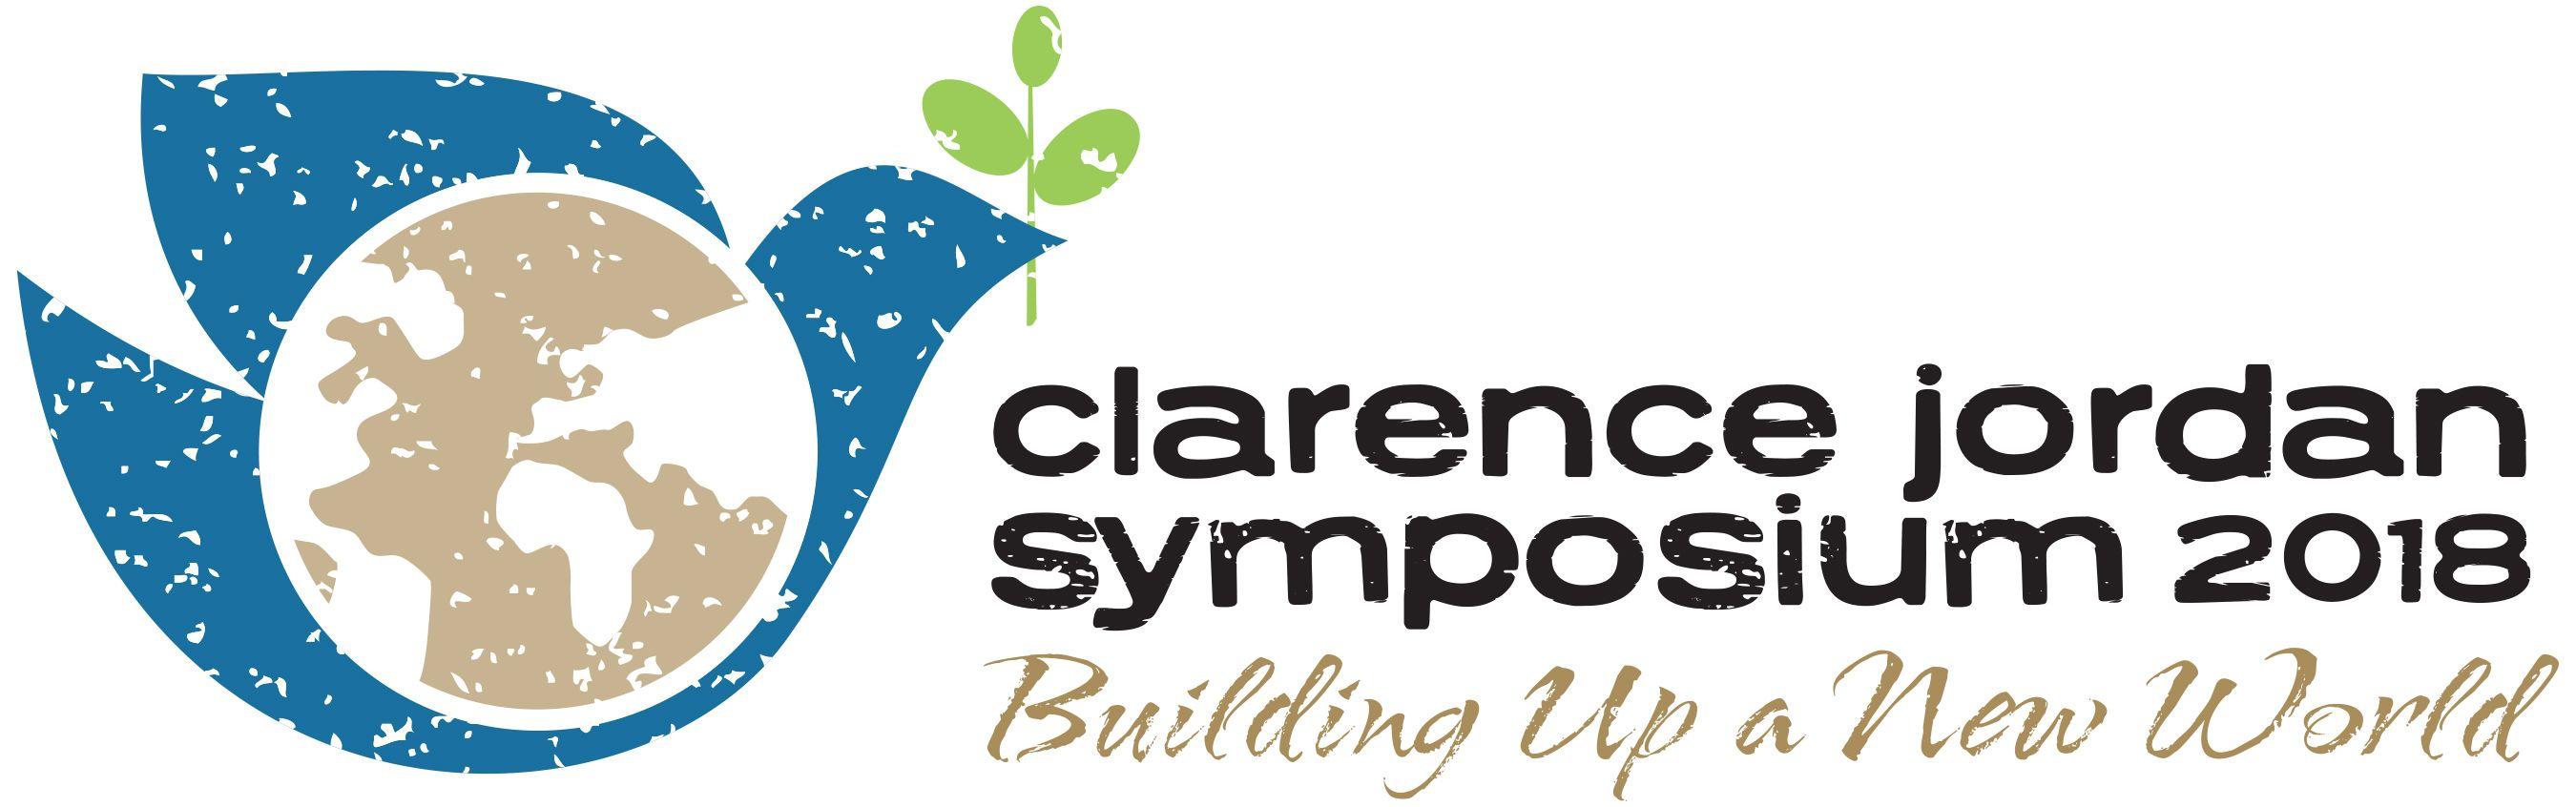 Clarence Logo - Clarence Jordan Symposium 2018